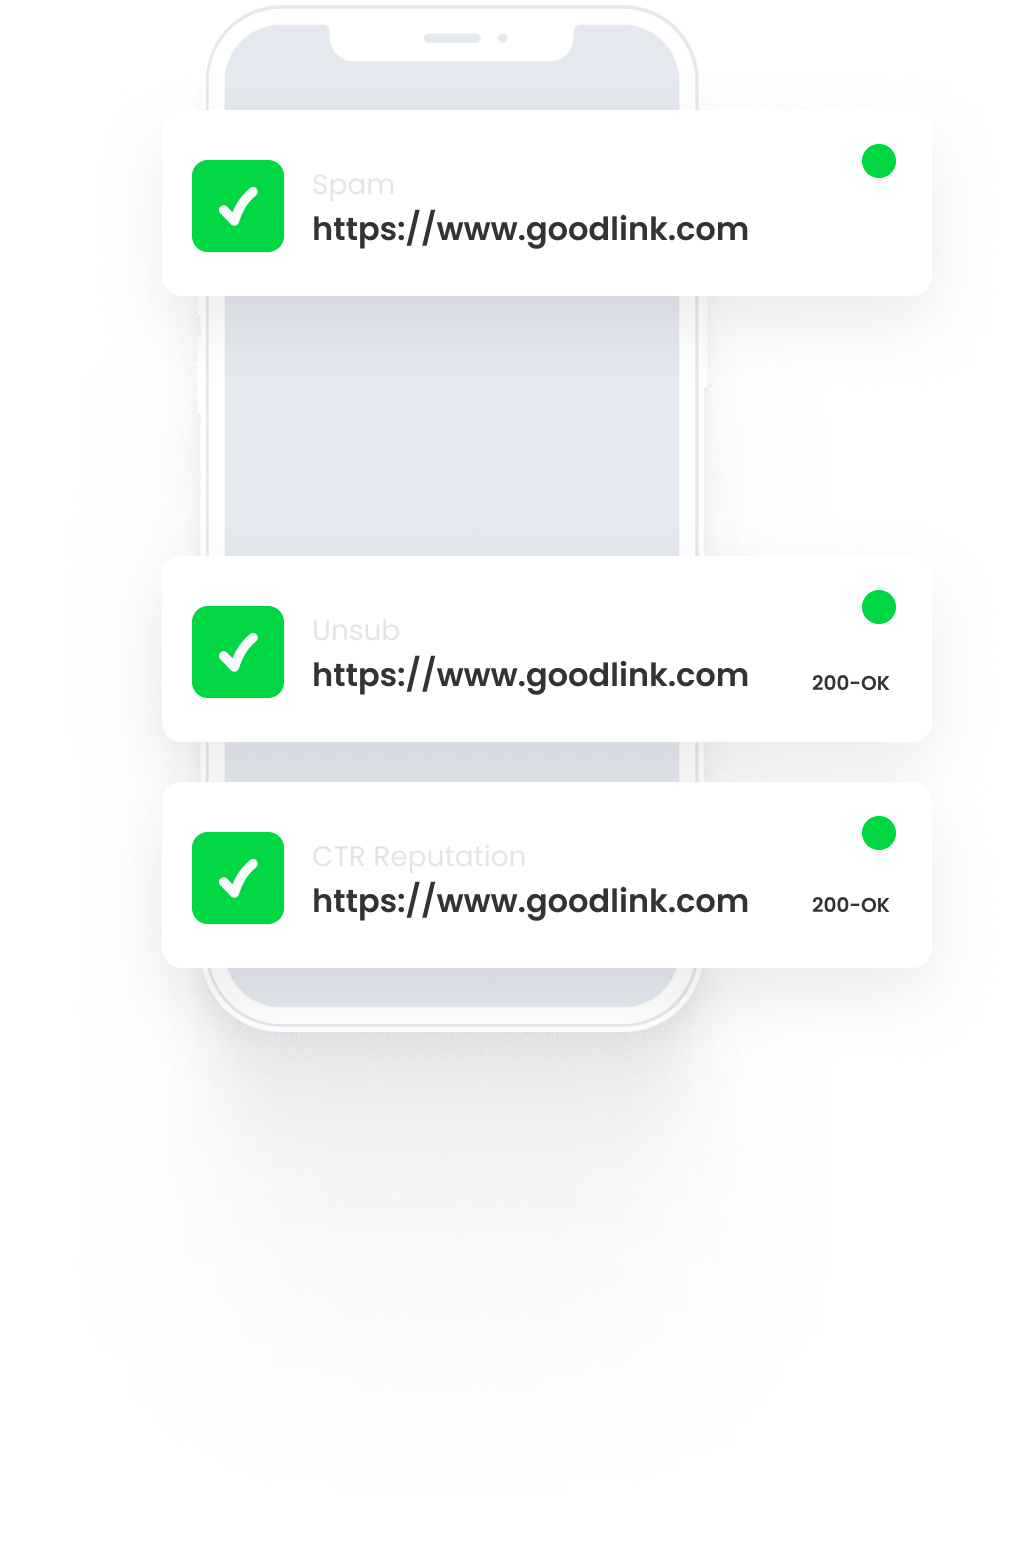 sms link validation tool